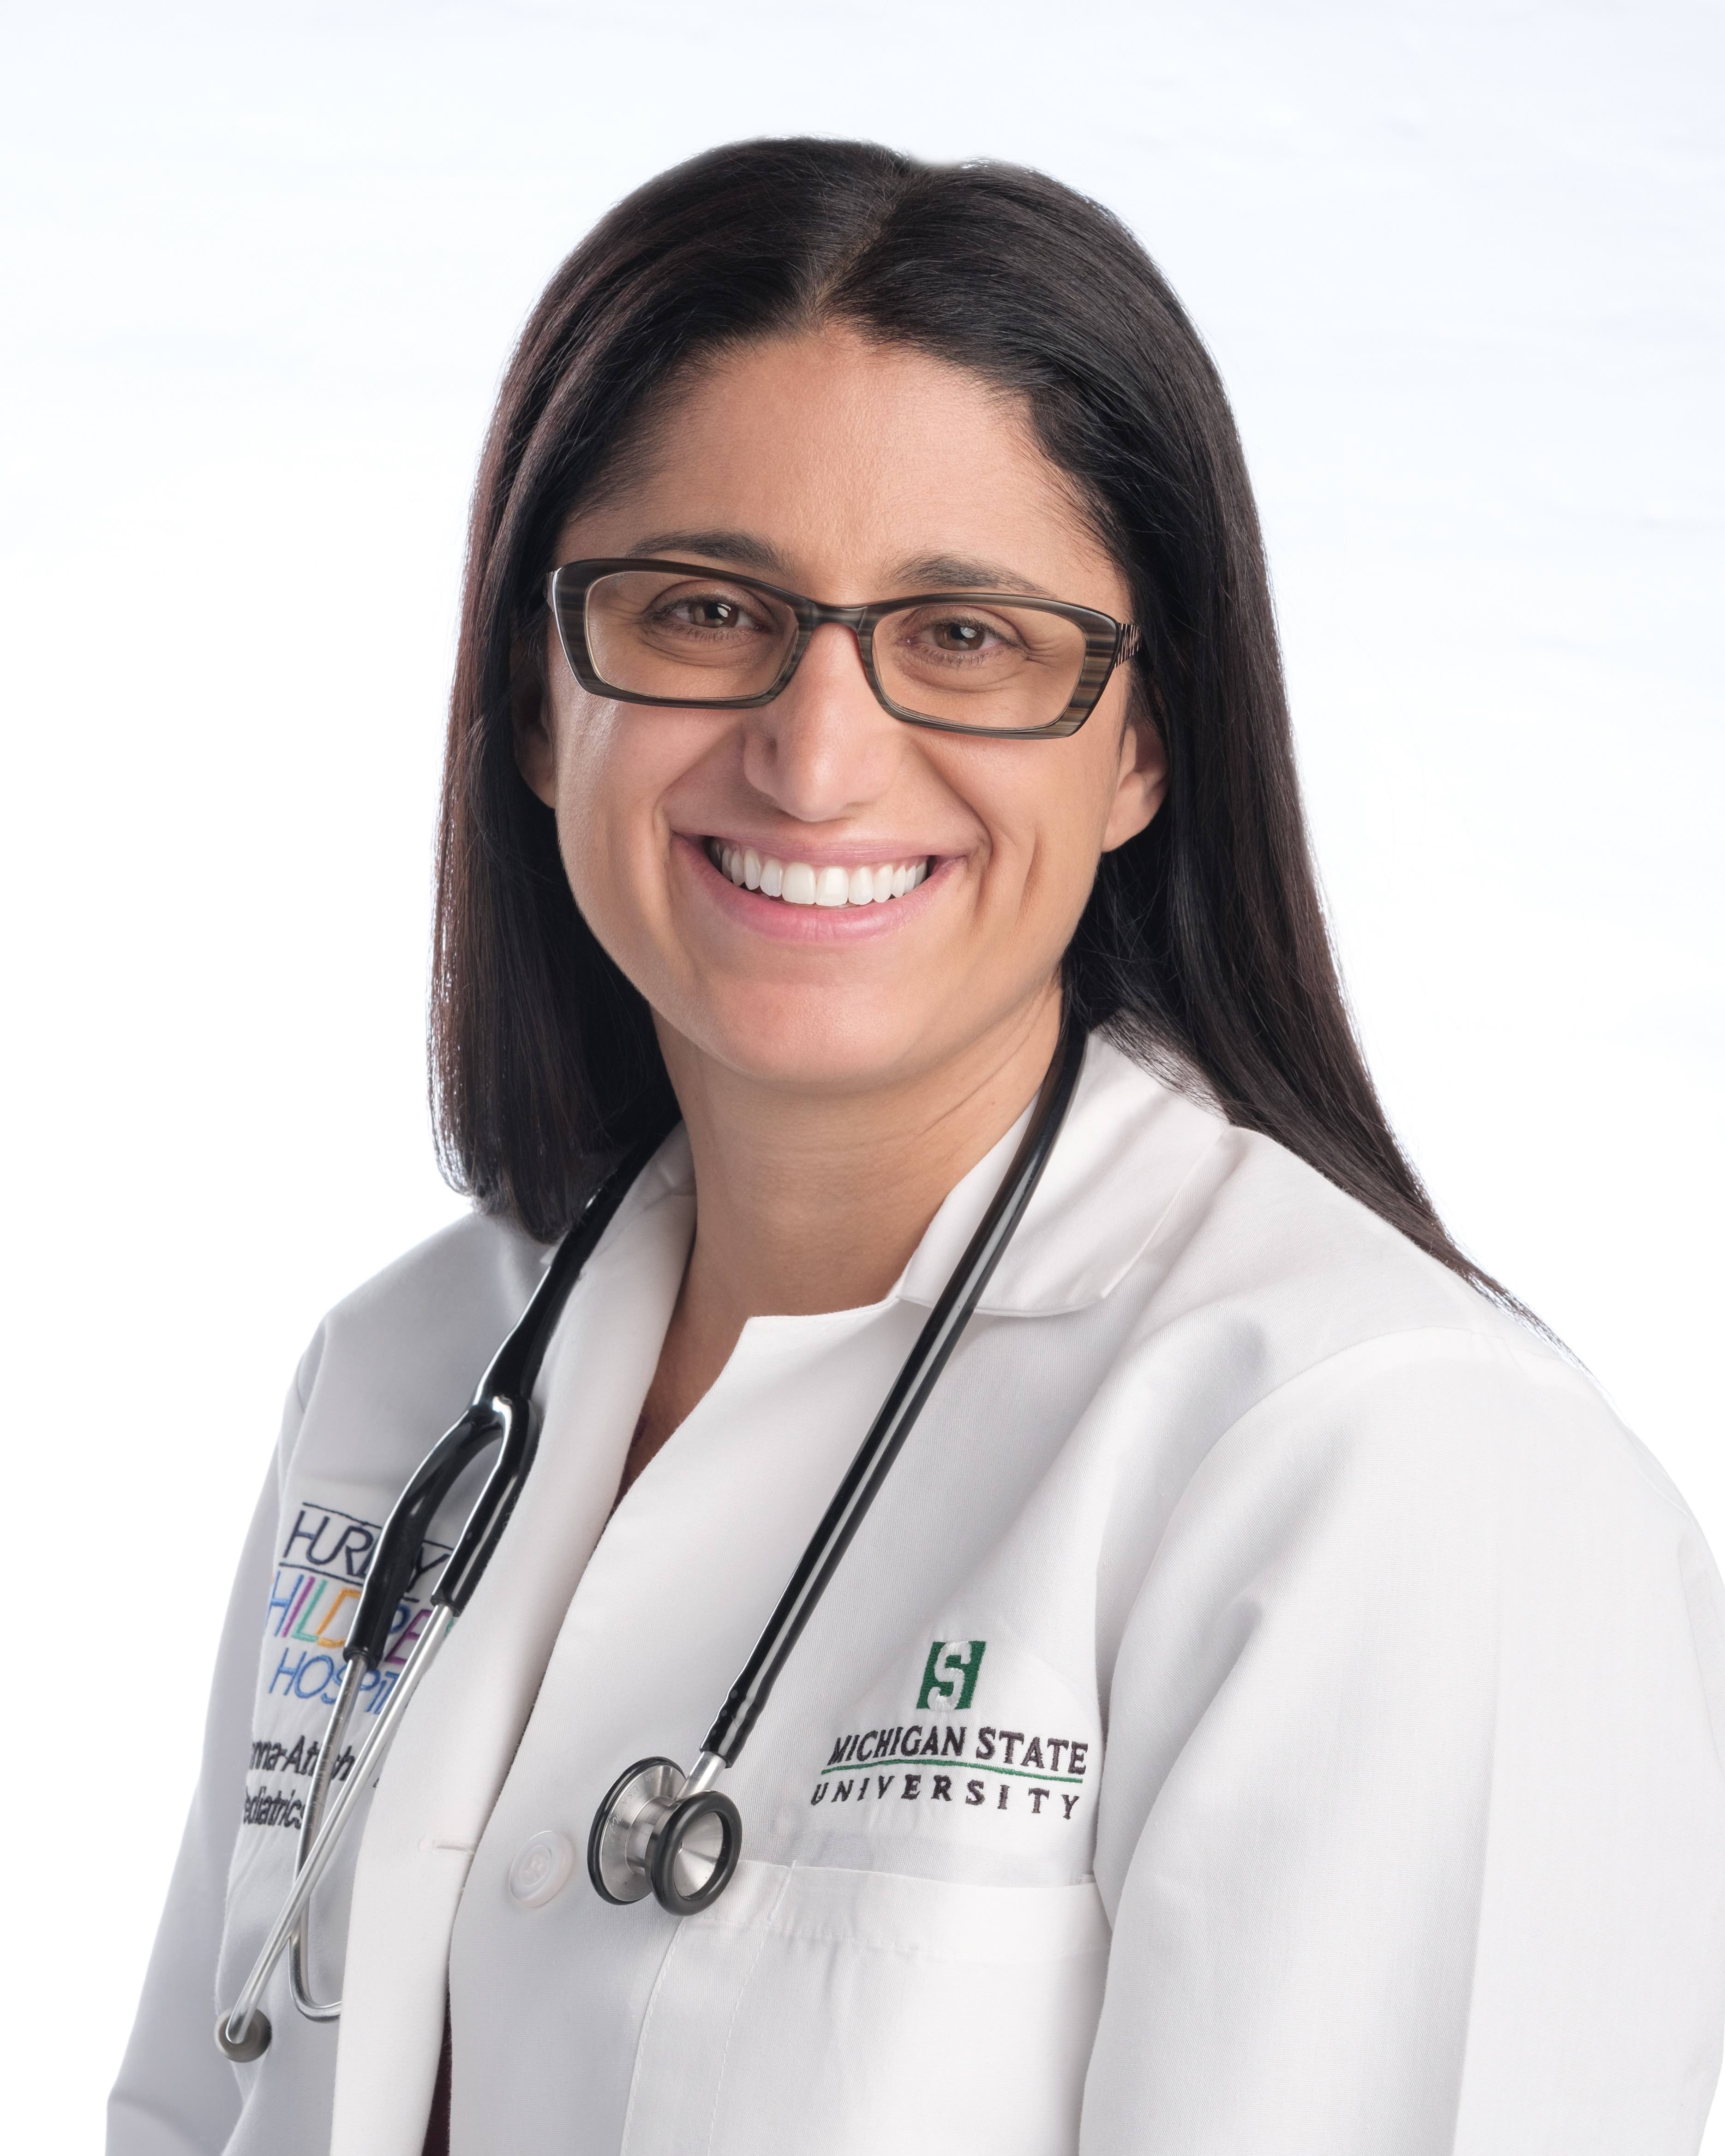 Dr. Mona Hanna-Attisha Headshot in Physician Coat